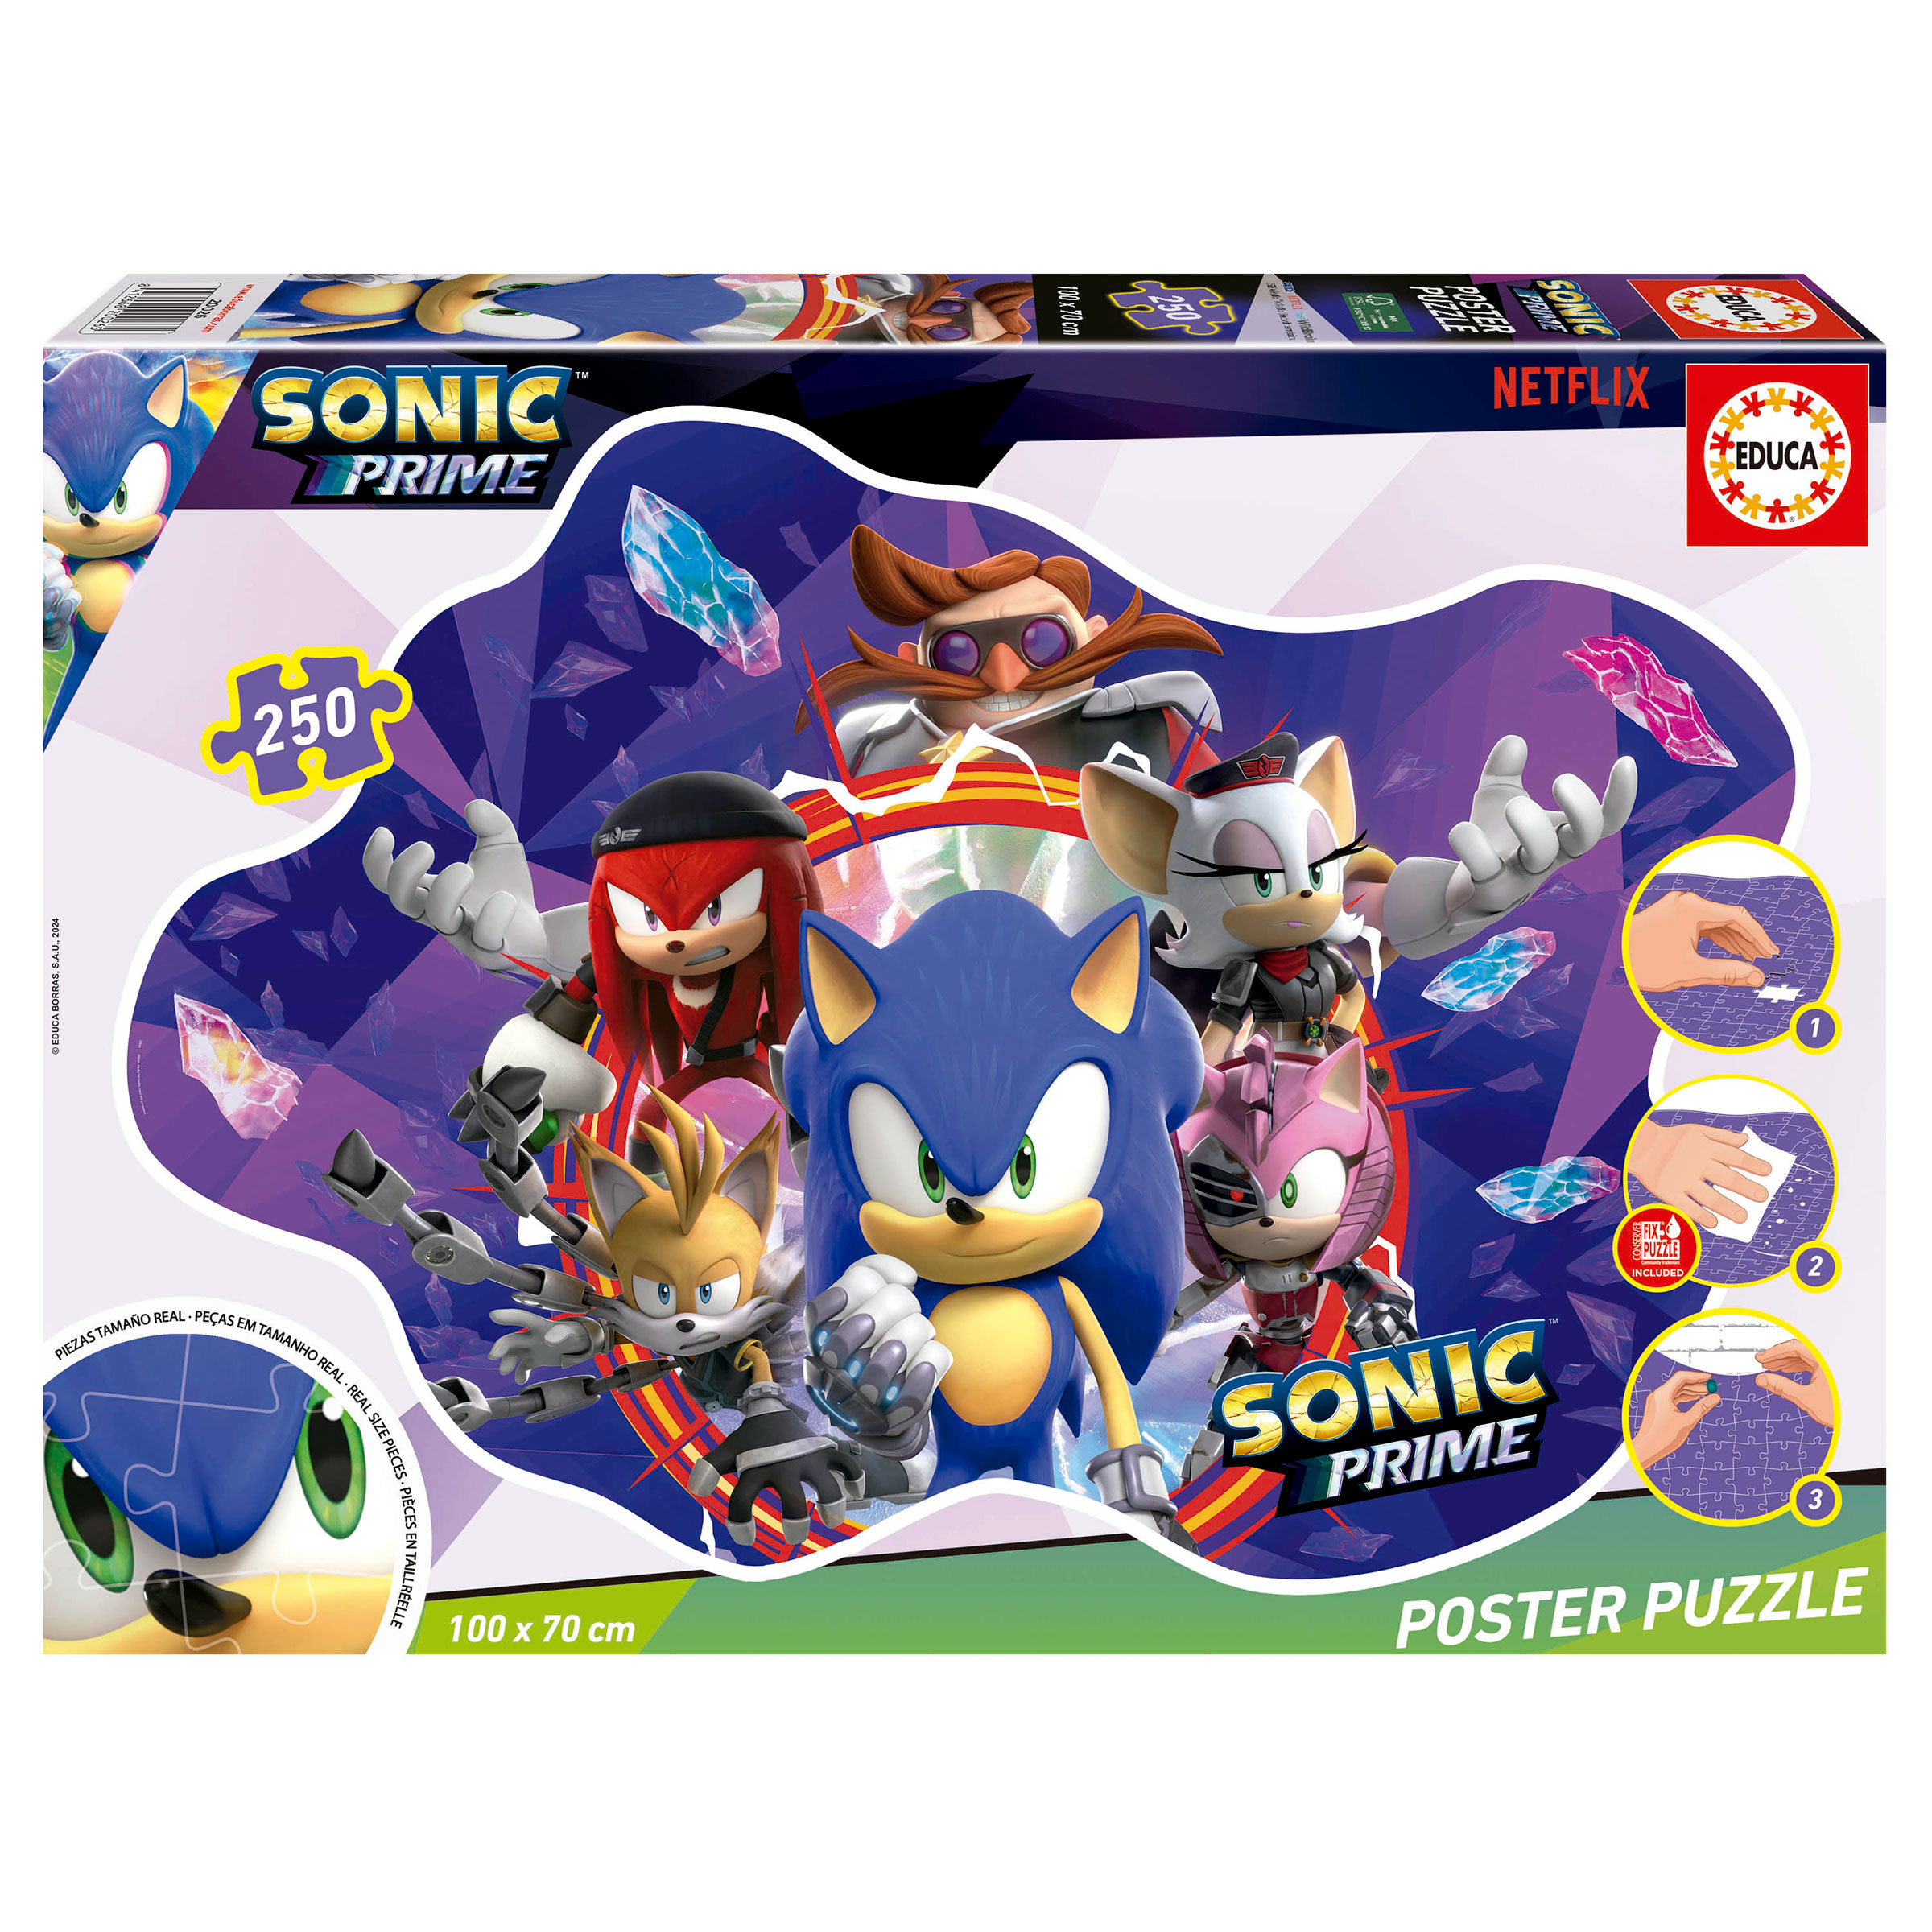 250 Sonic Prime Poster Puzzle